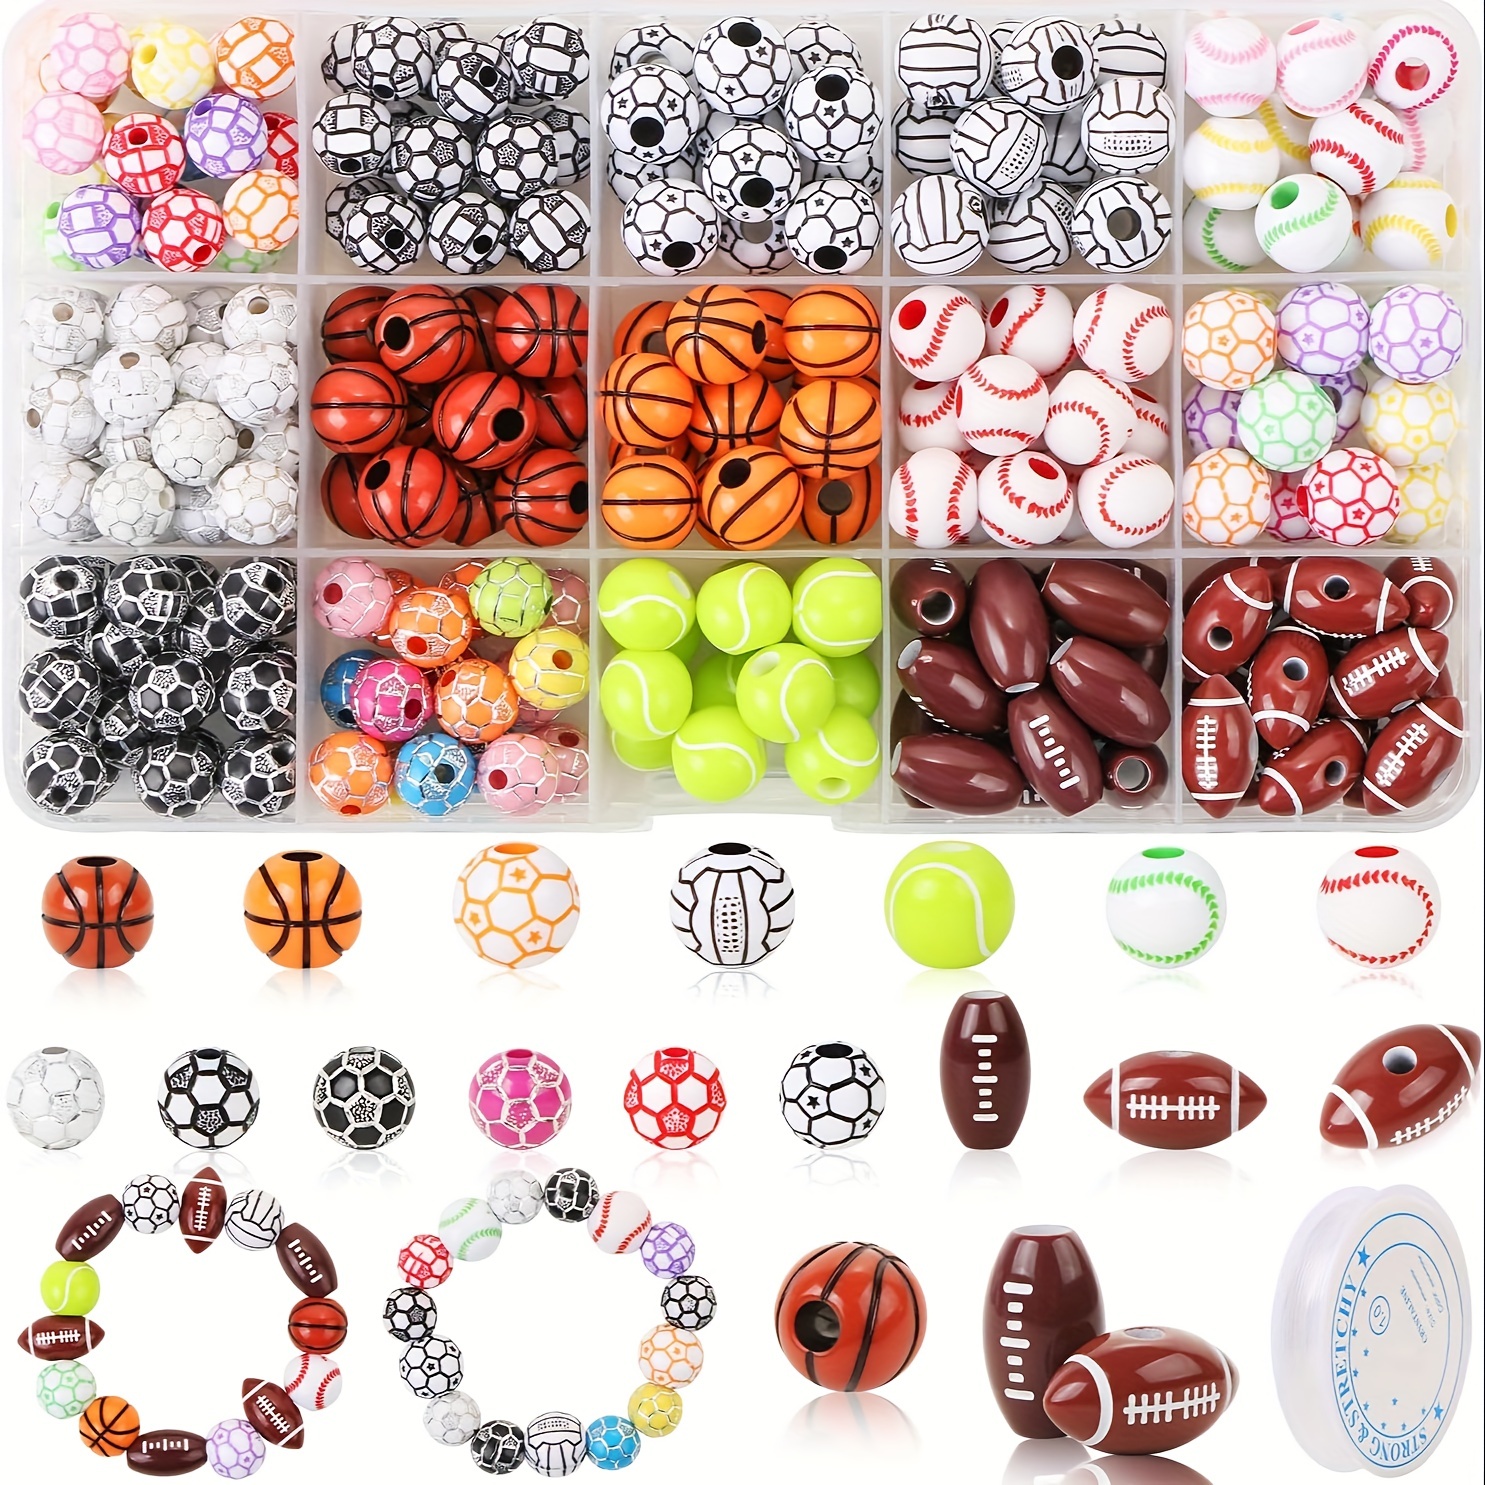 400 Pcs Sports Ball Beads for Jewelry Making, Acrylic Sports Beads Bulk,  Baseball Basketball Soccer Volleyball Softball Football Beads with Box